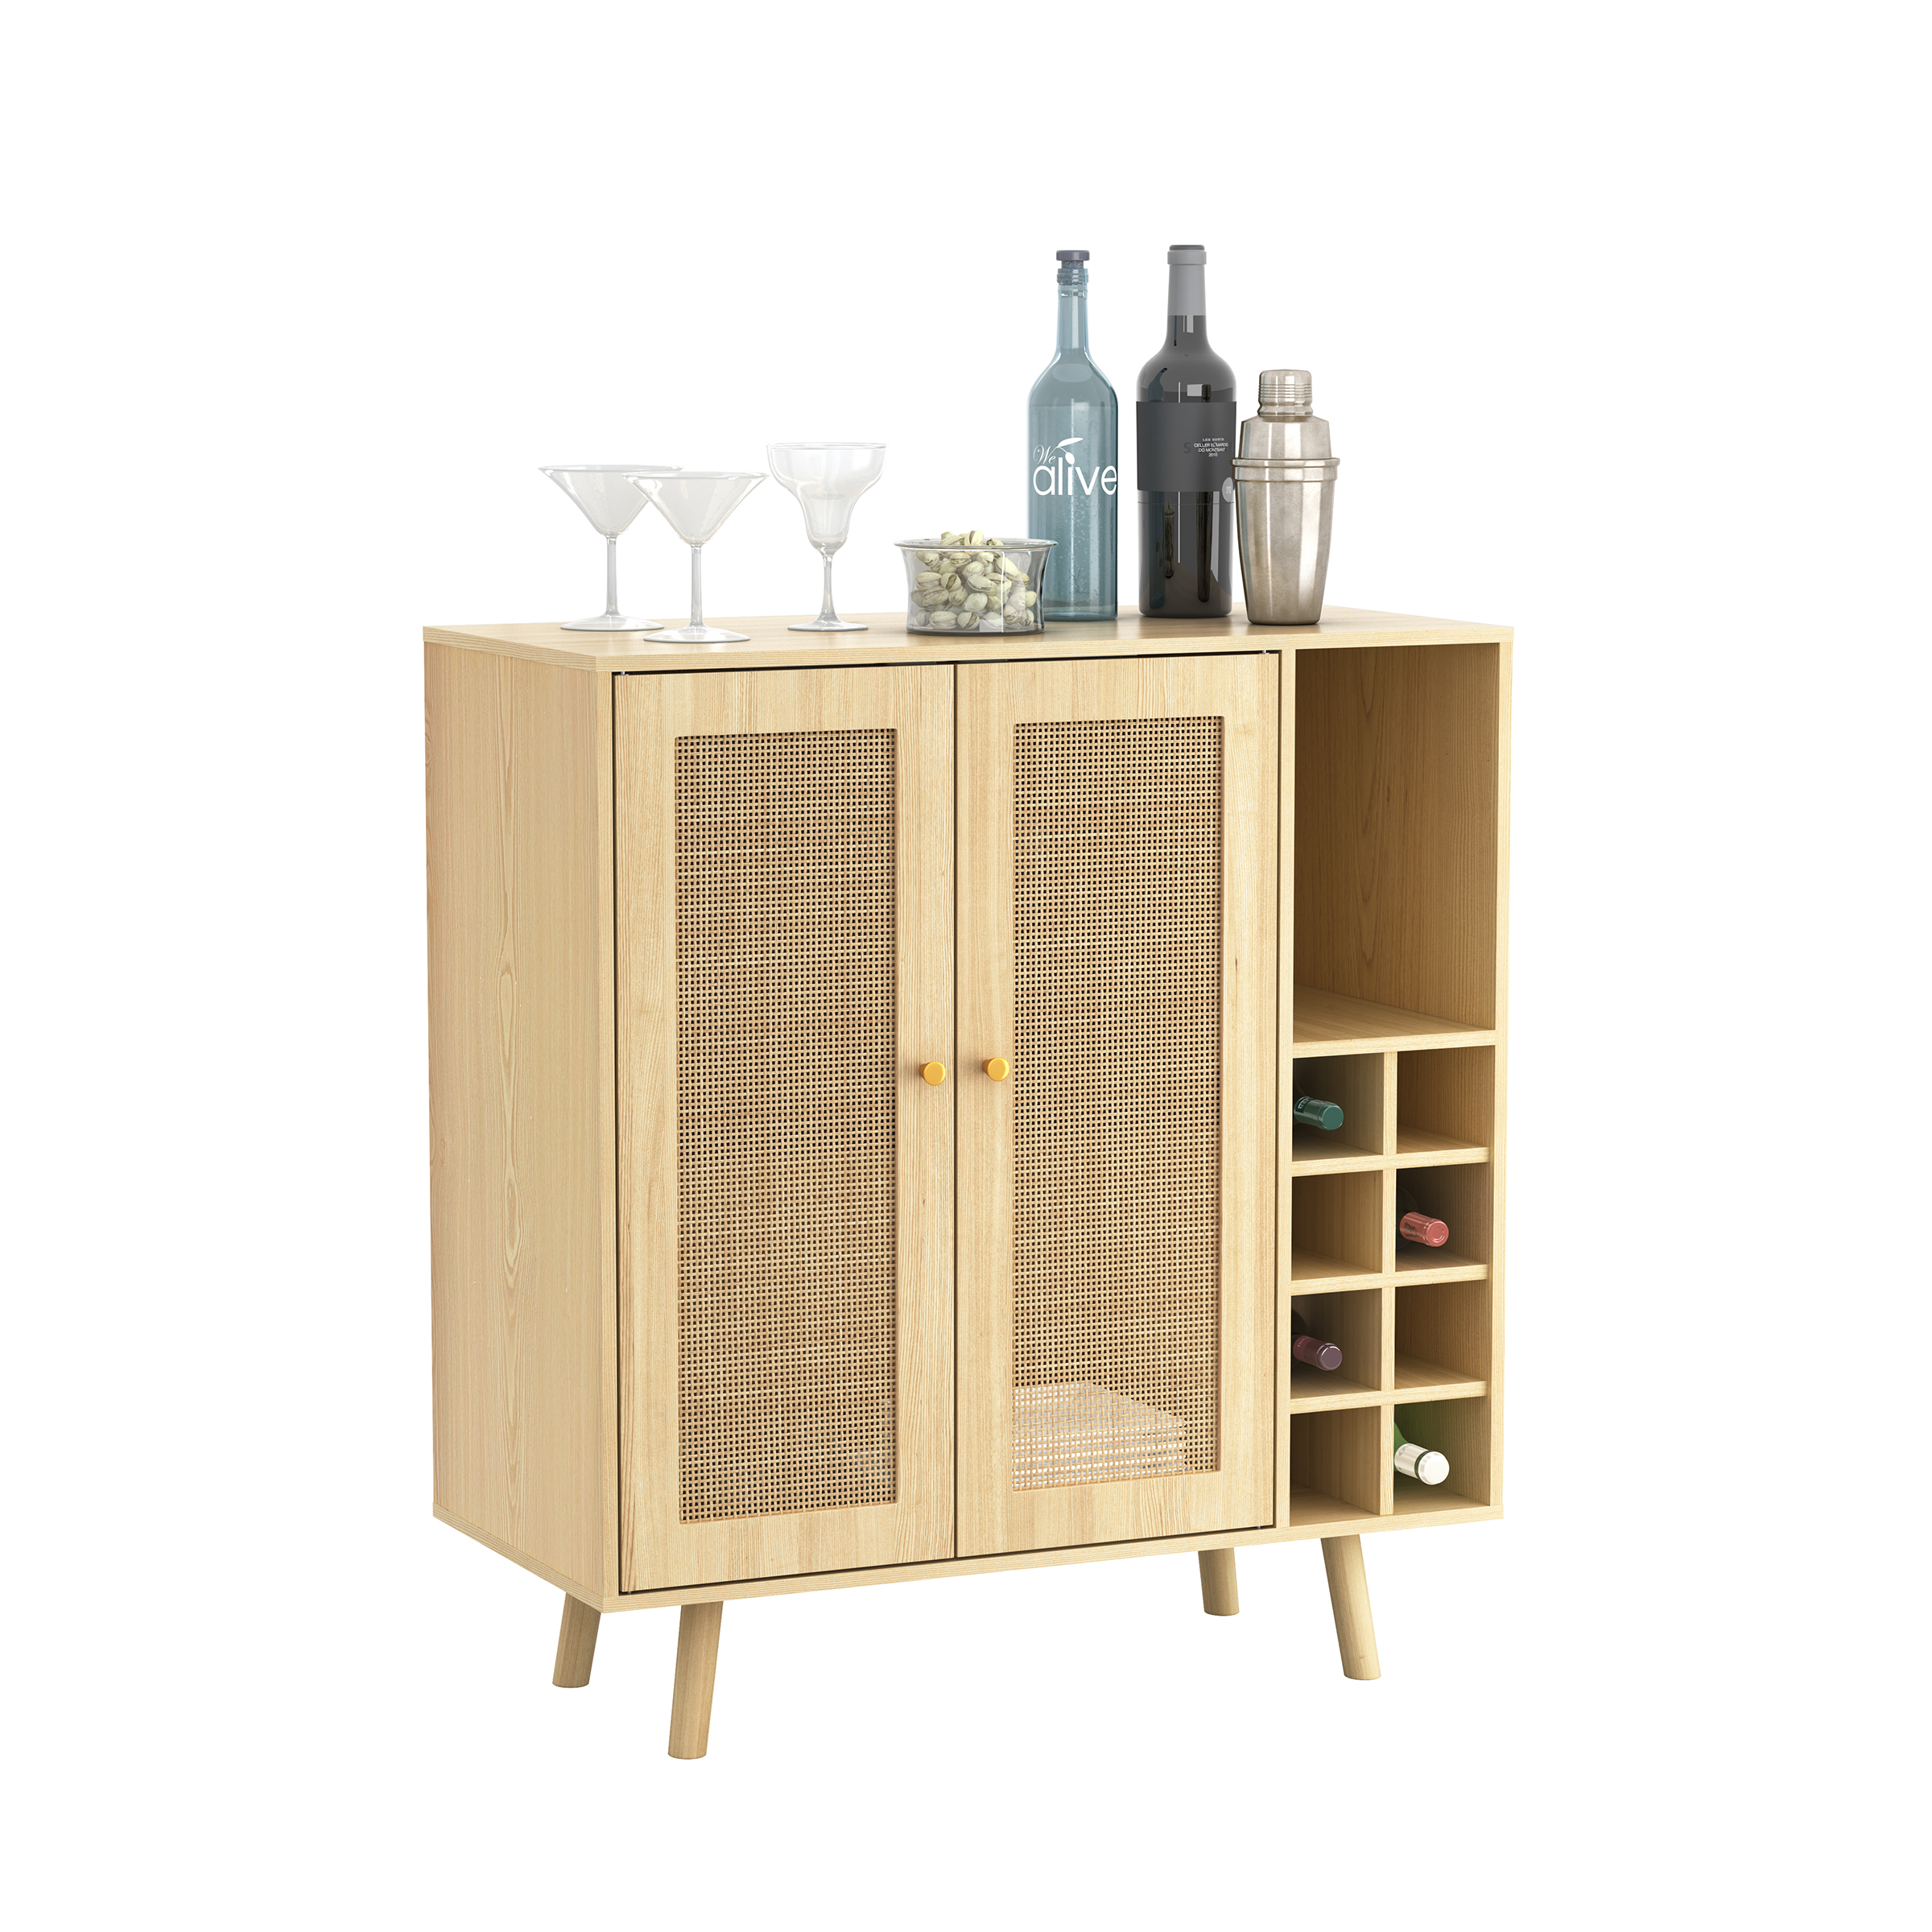 Atlantic Loft & Luv Coda Rattan Bar Cabinet with Wine Holder, Natural - image 4 of 10